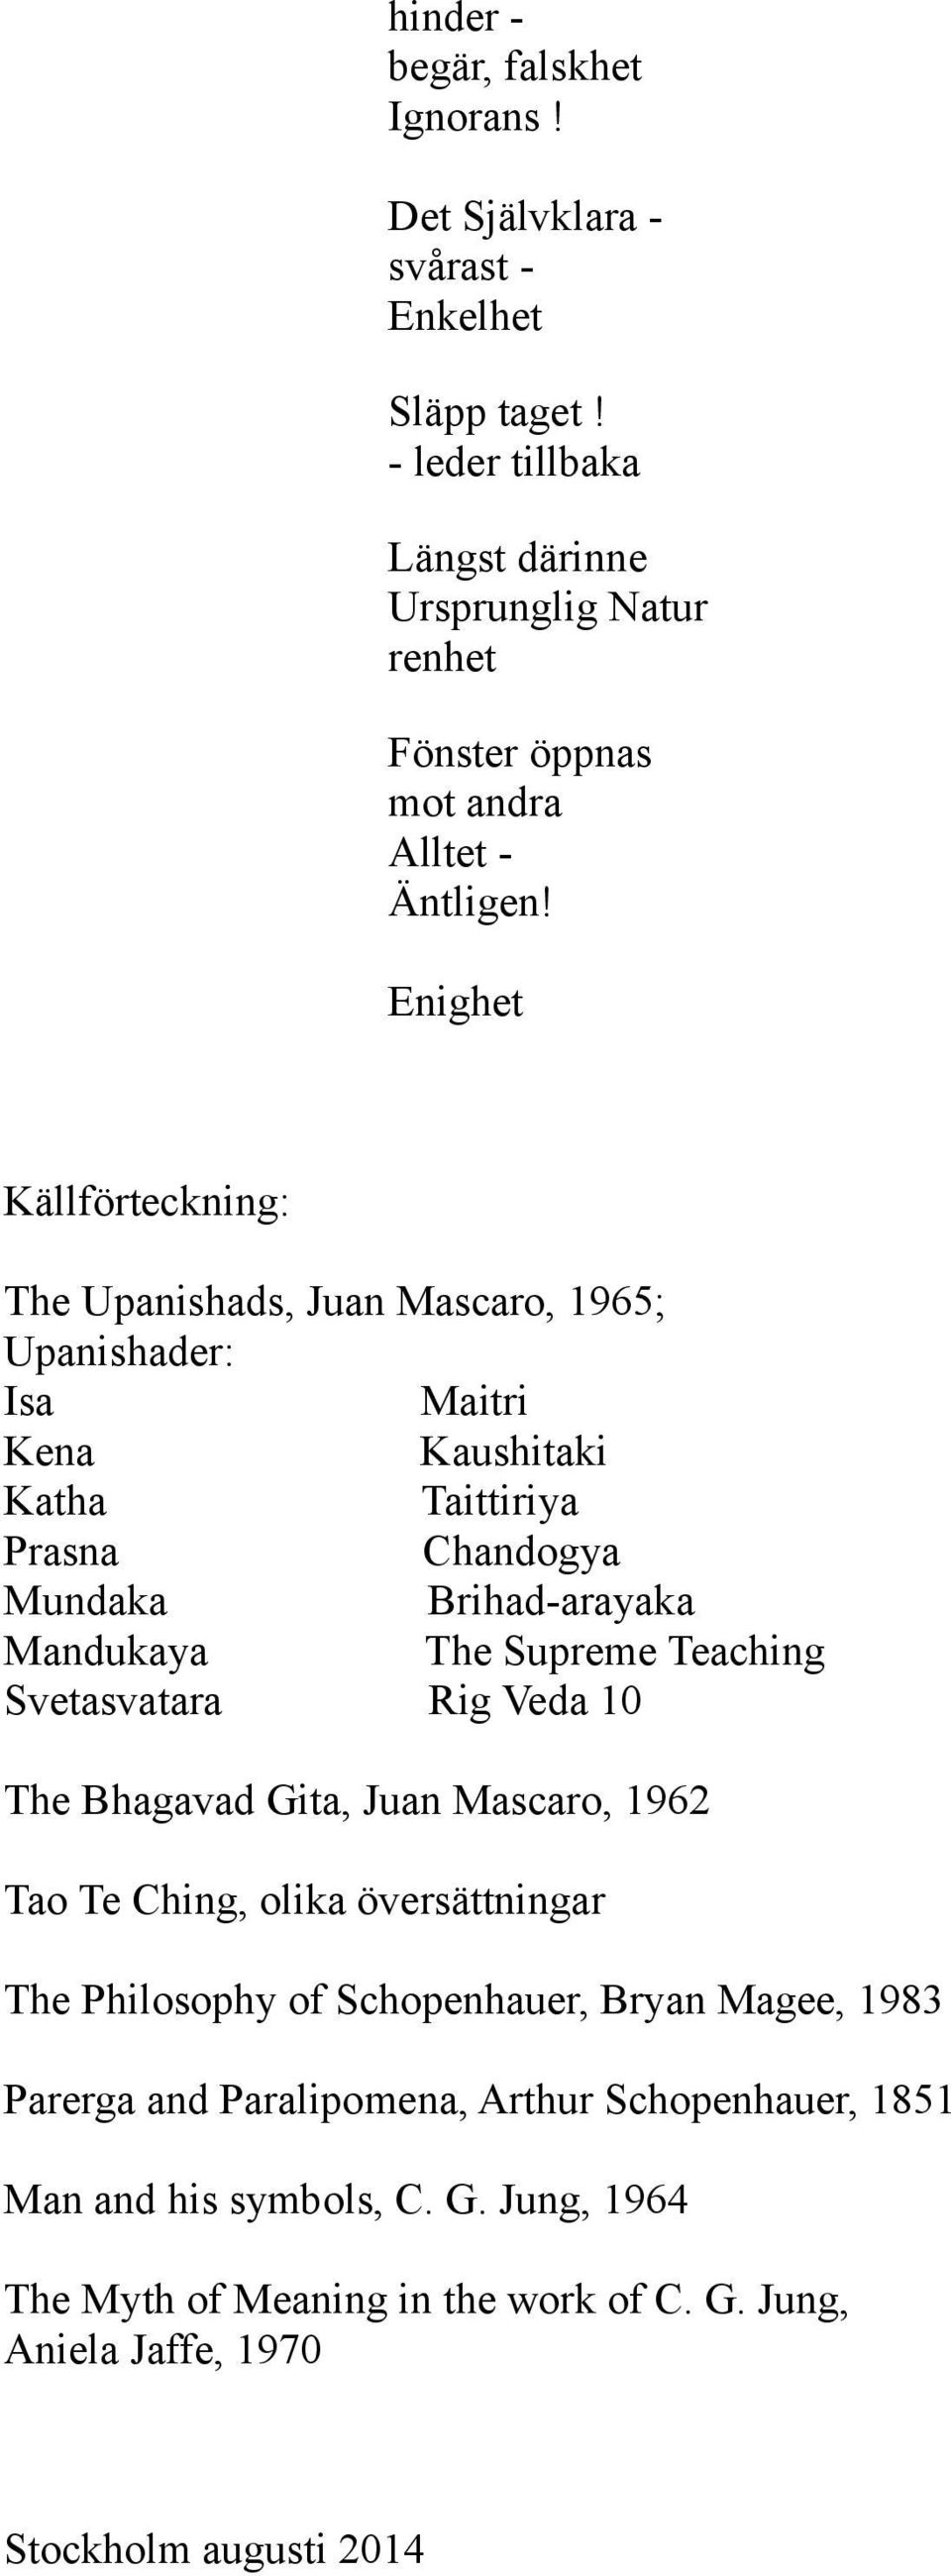 Enighet Källförteckning: The Upanishads, Juan Mascaro, 1965; Upanishader: Isa Maitri Kena Kaushitaki Katha Taittiriya Prasna Chandogya Mundaka Brihad-arayaka Mandukaya The